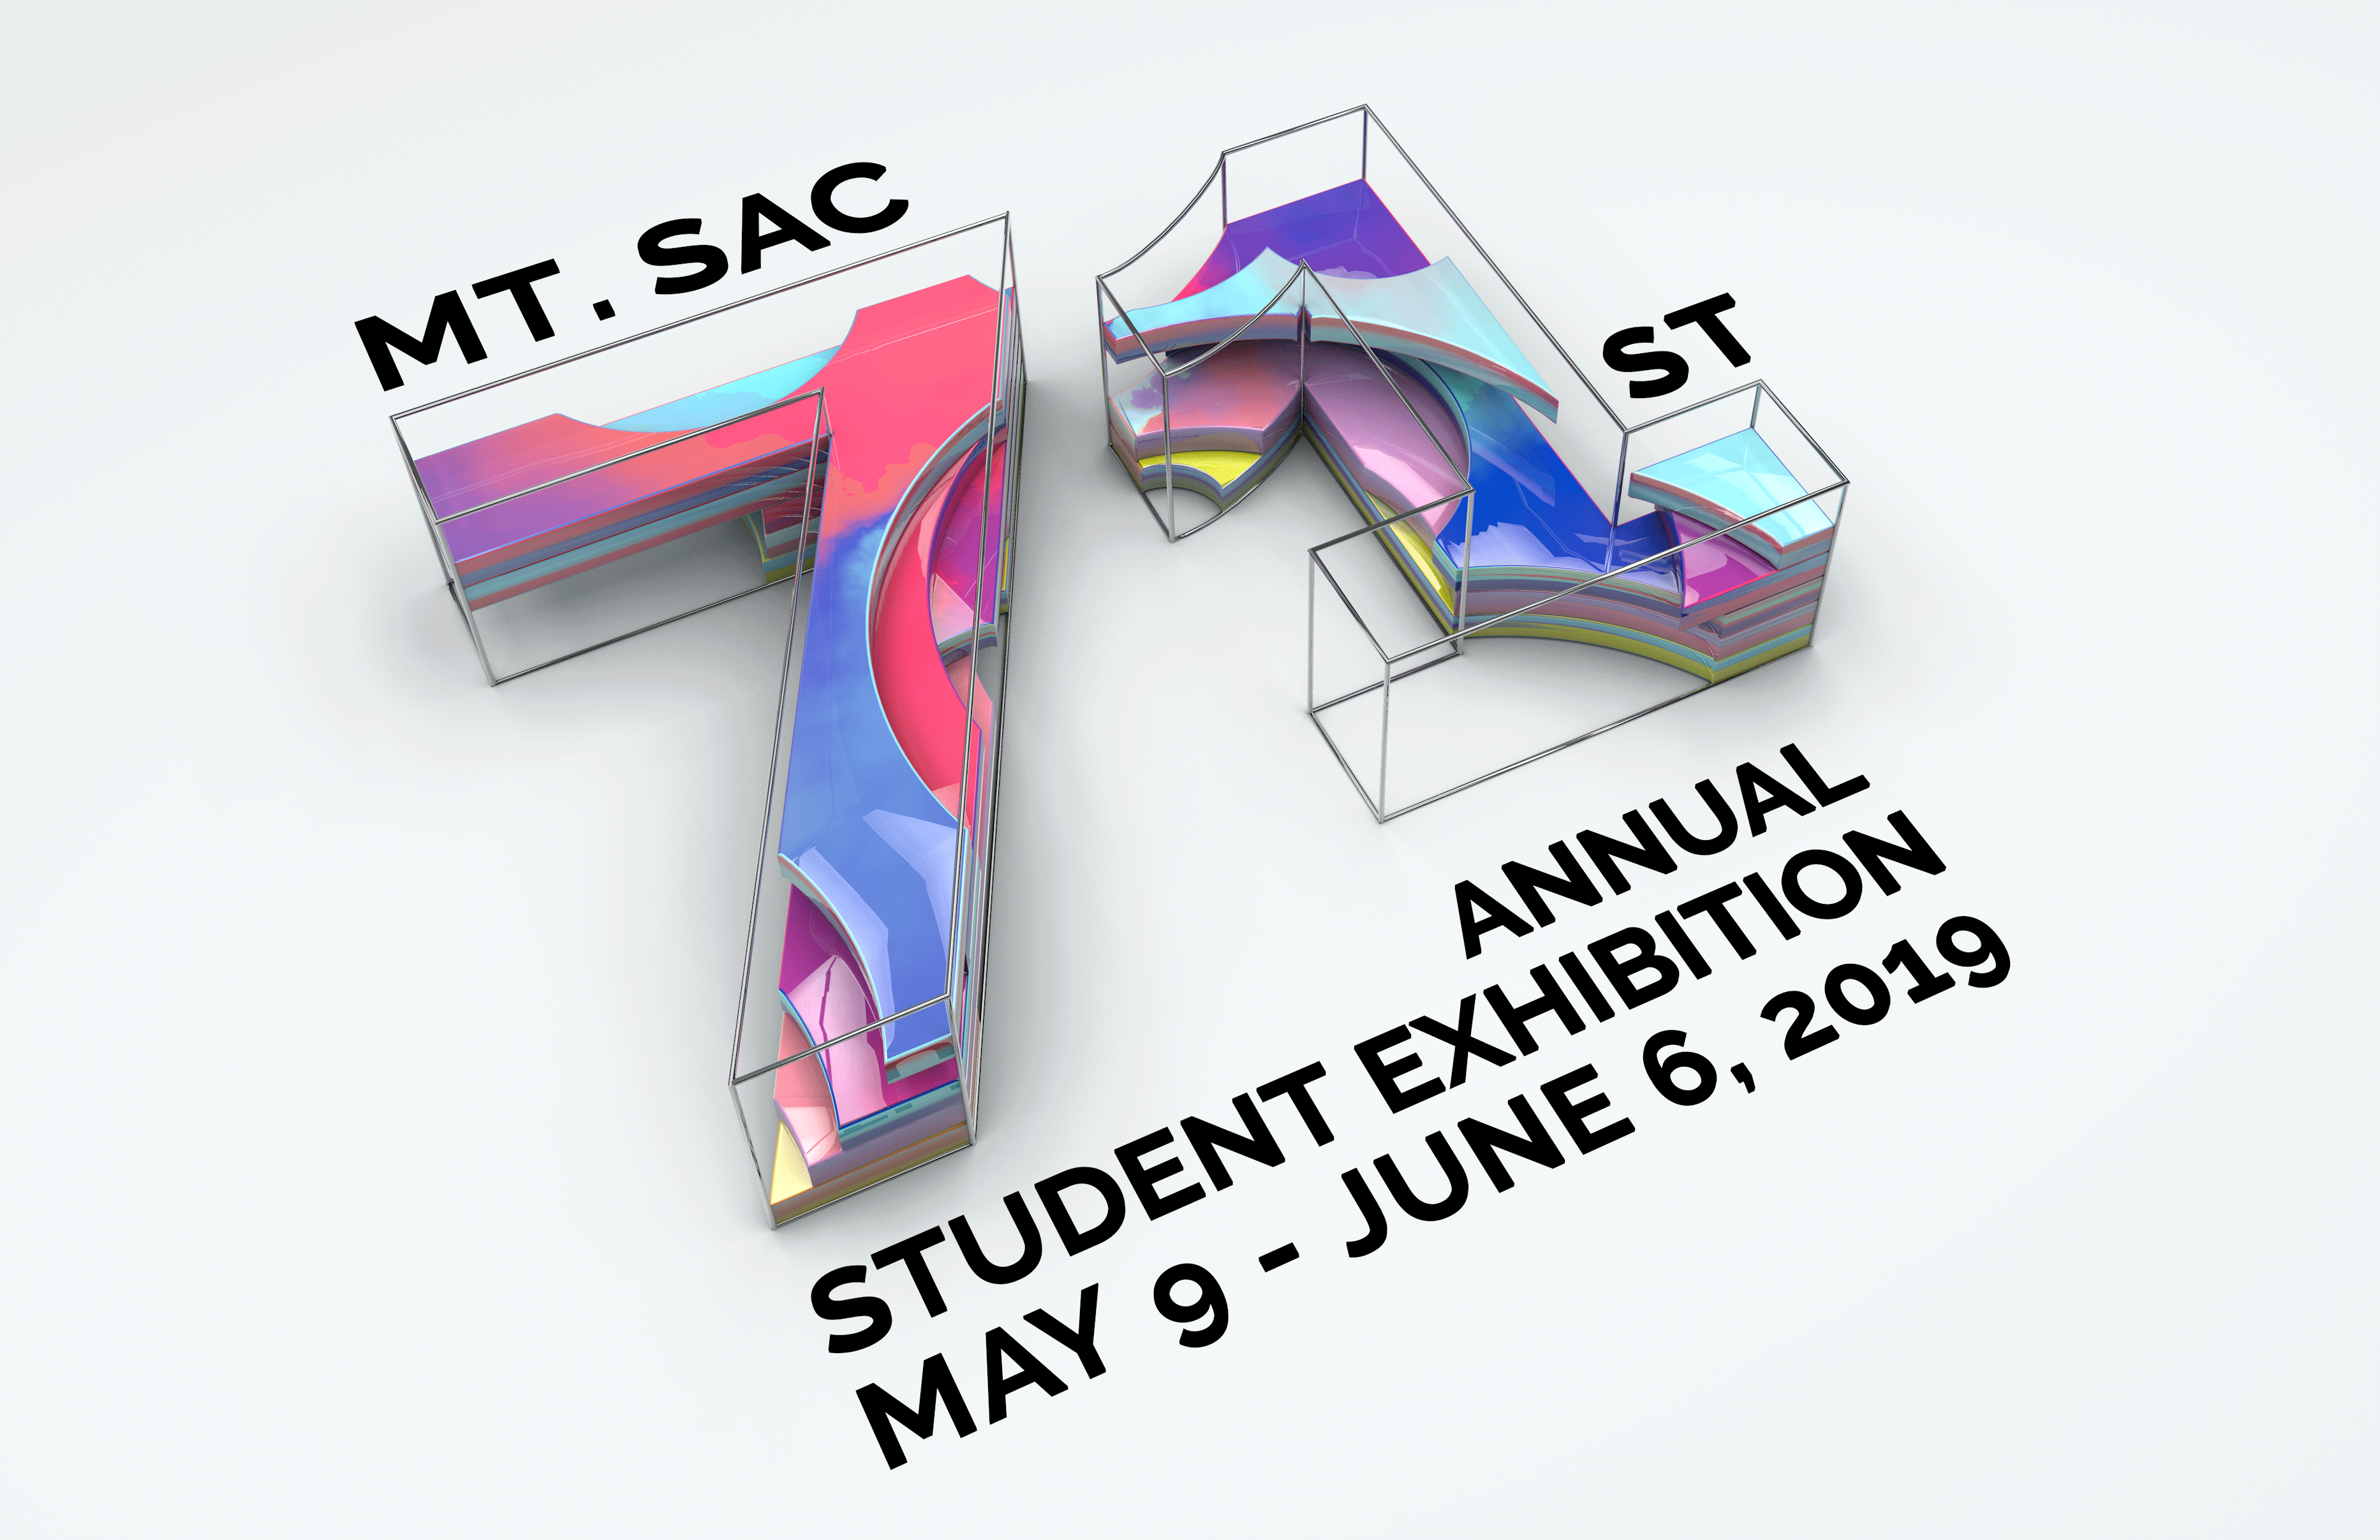 71st Student Art Exhibition Promotional Piece